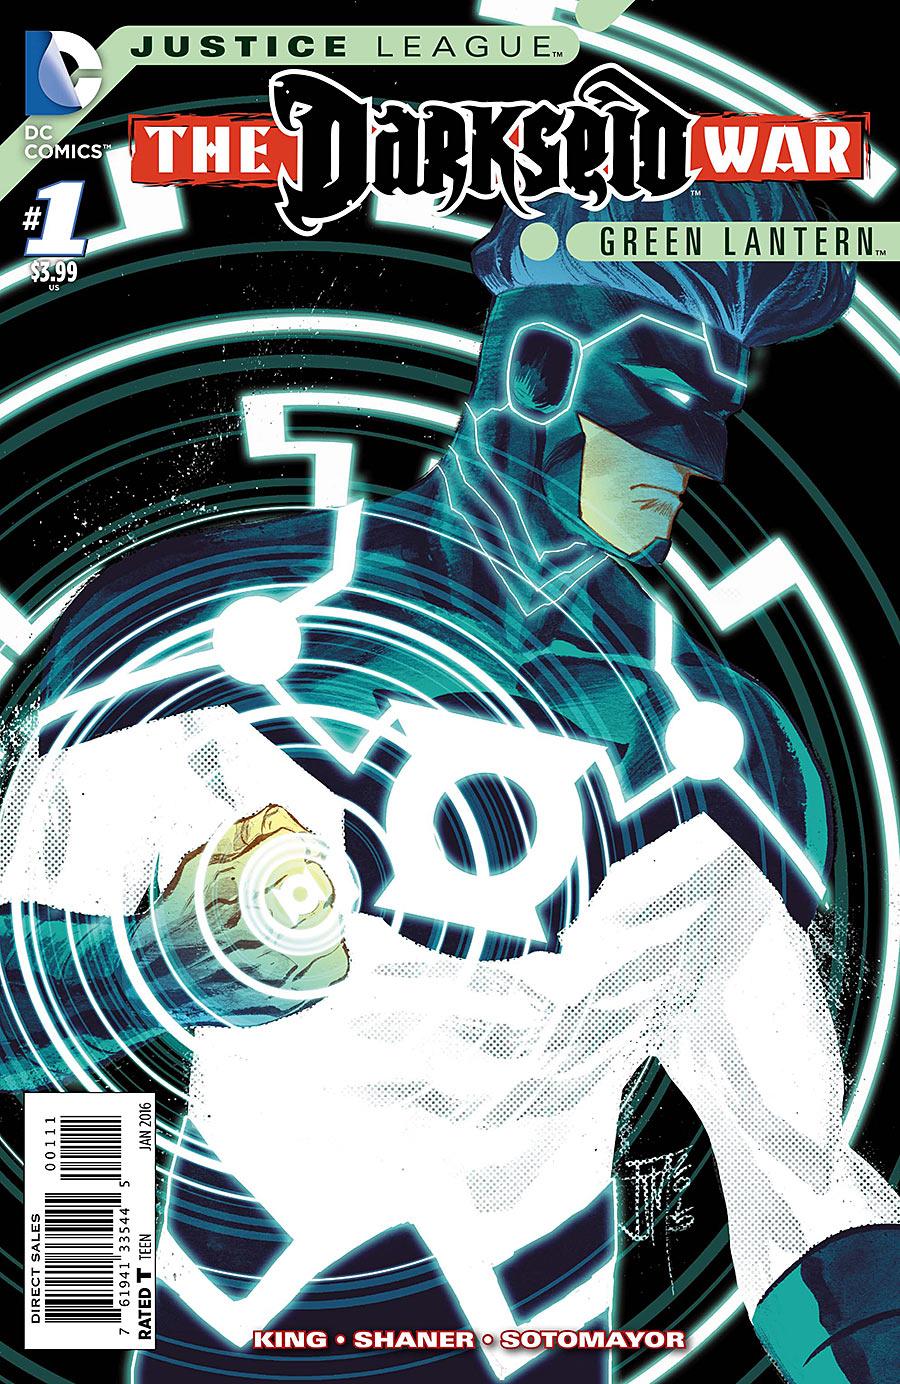 Justice League: Darkseid War: Green Lantern Vol. 1 #1